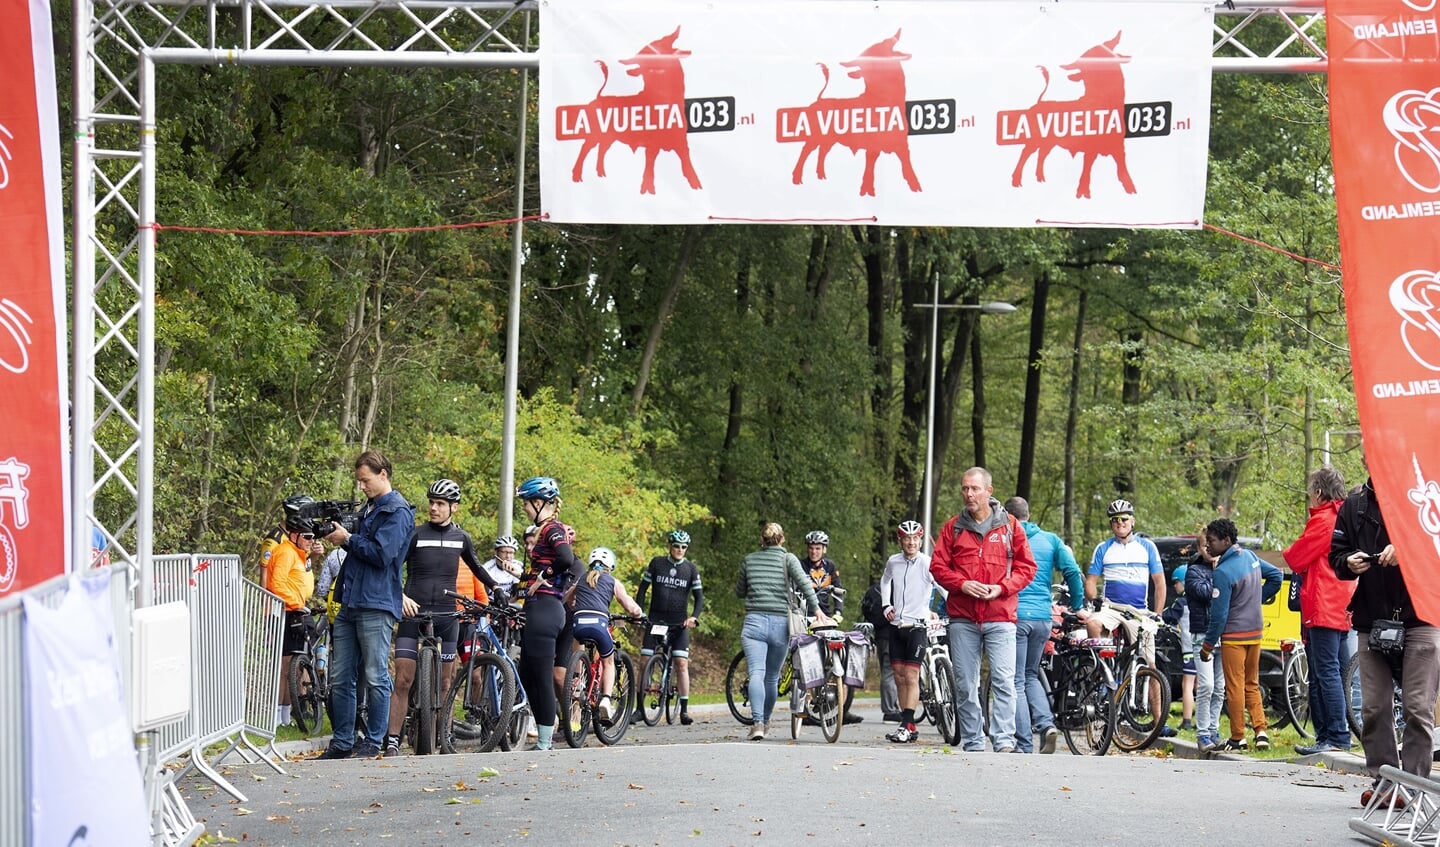 Lavuelta033 fietsen bergkoning(in) van Amersfoort